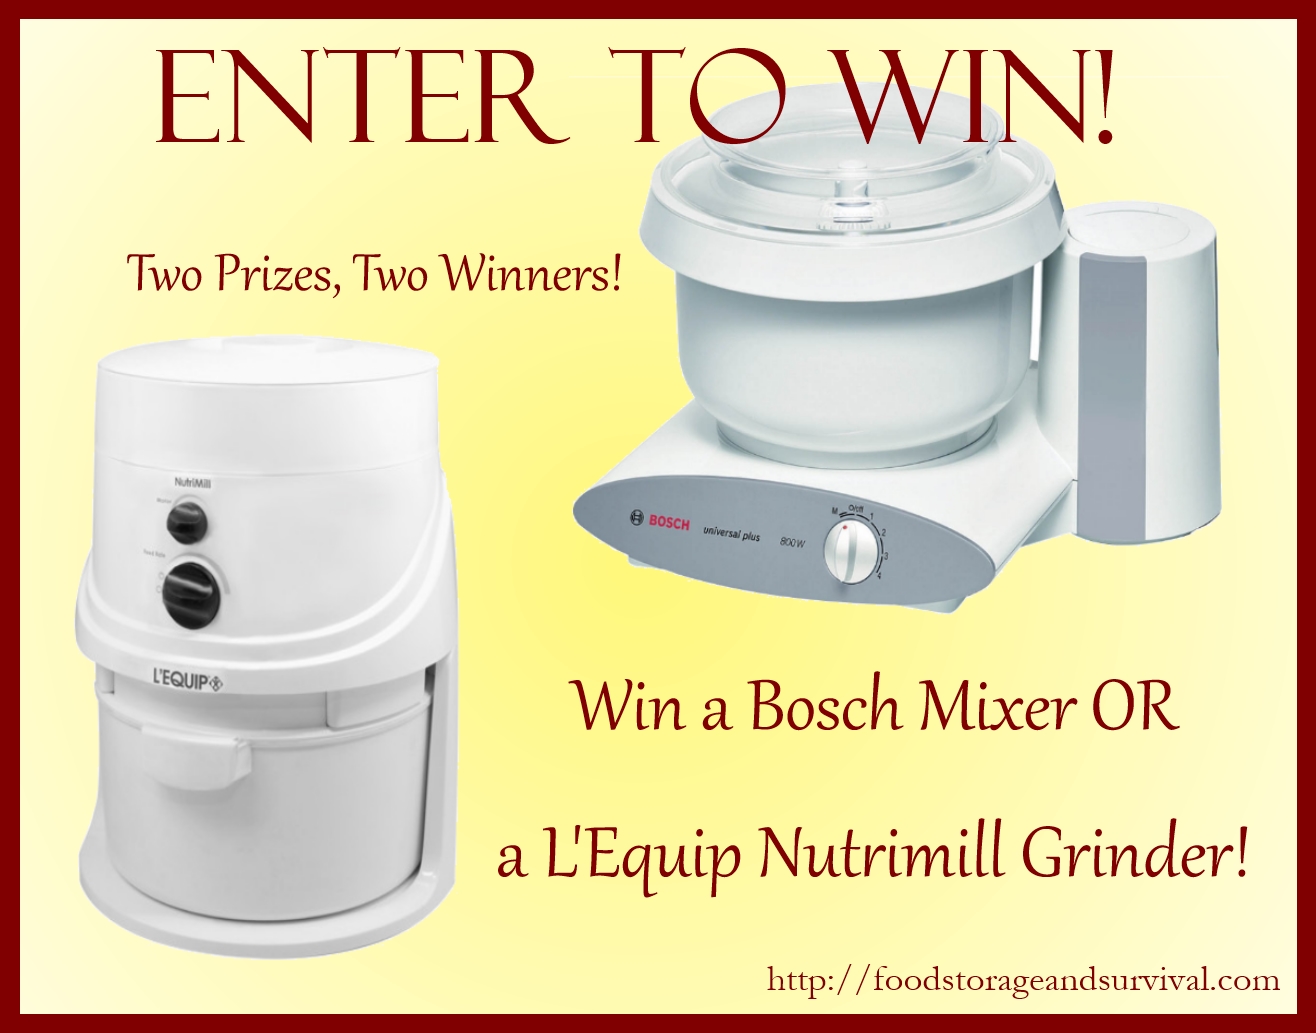 Bosch Mixer and L’Equip Nutrimill Grinder Giveaway!